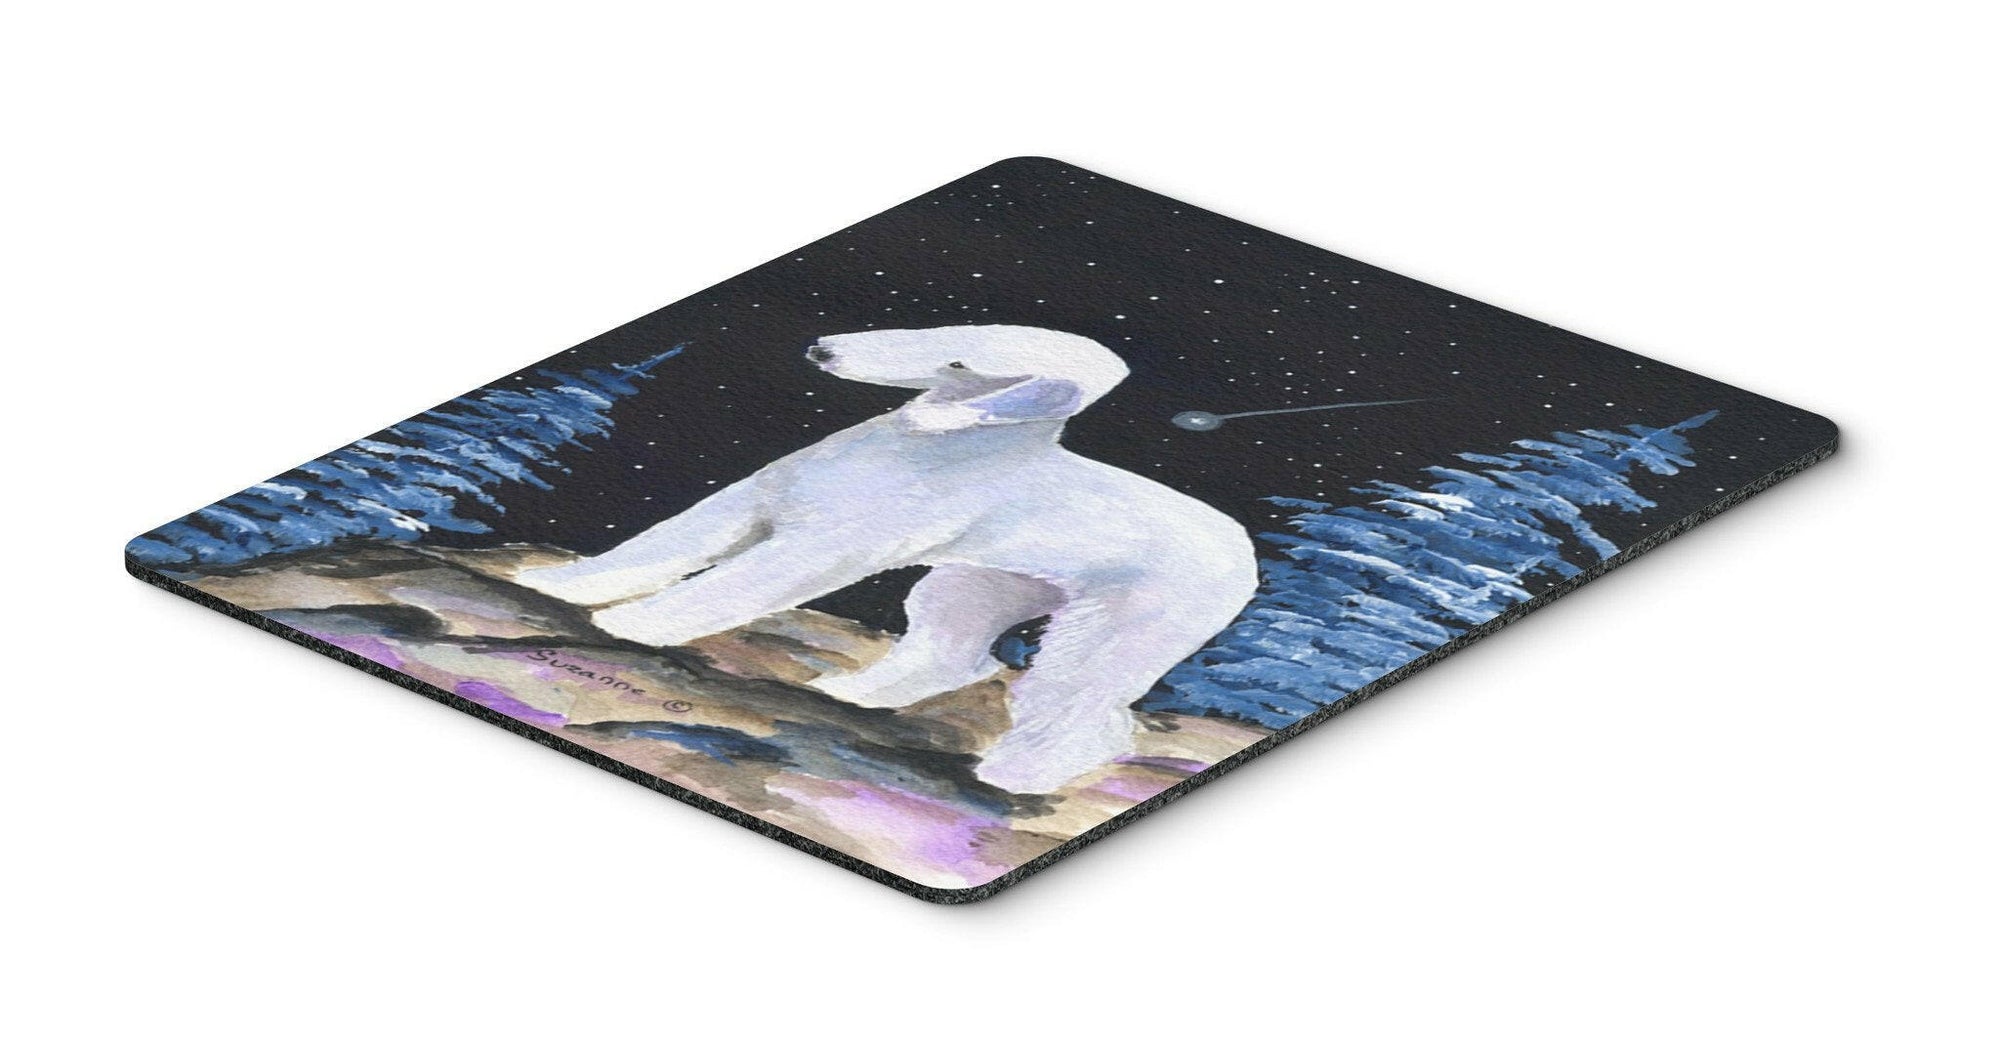 Starry Night Bedlington Terrier Mouse Pad / Hot Pad / Trivet by Caroline's Treasures